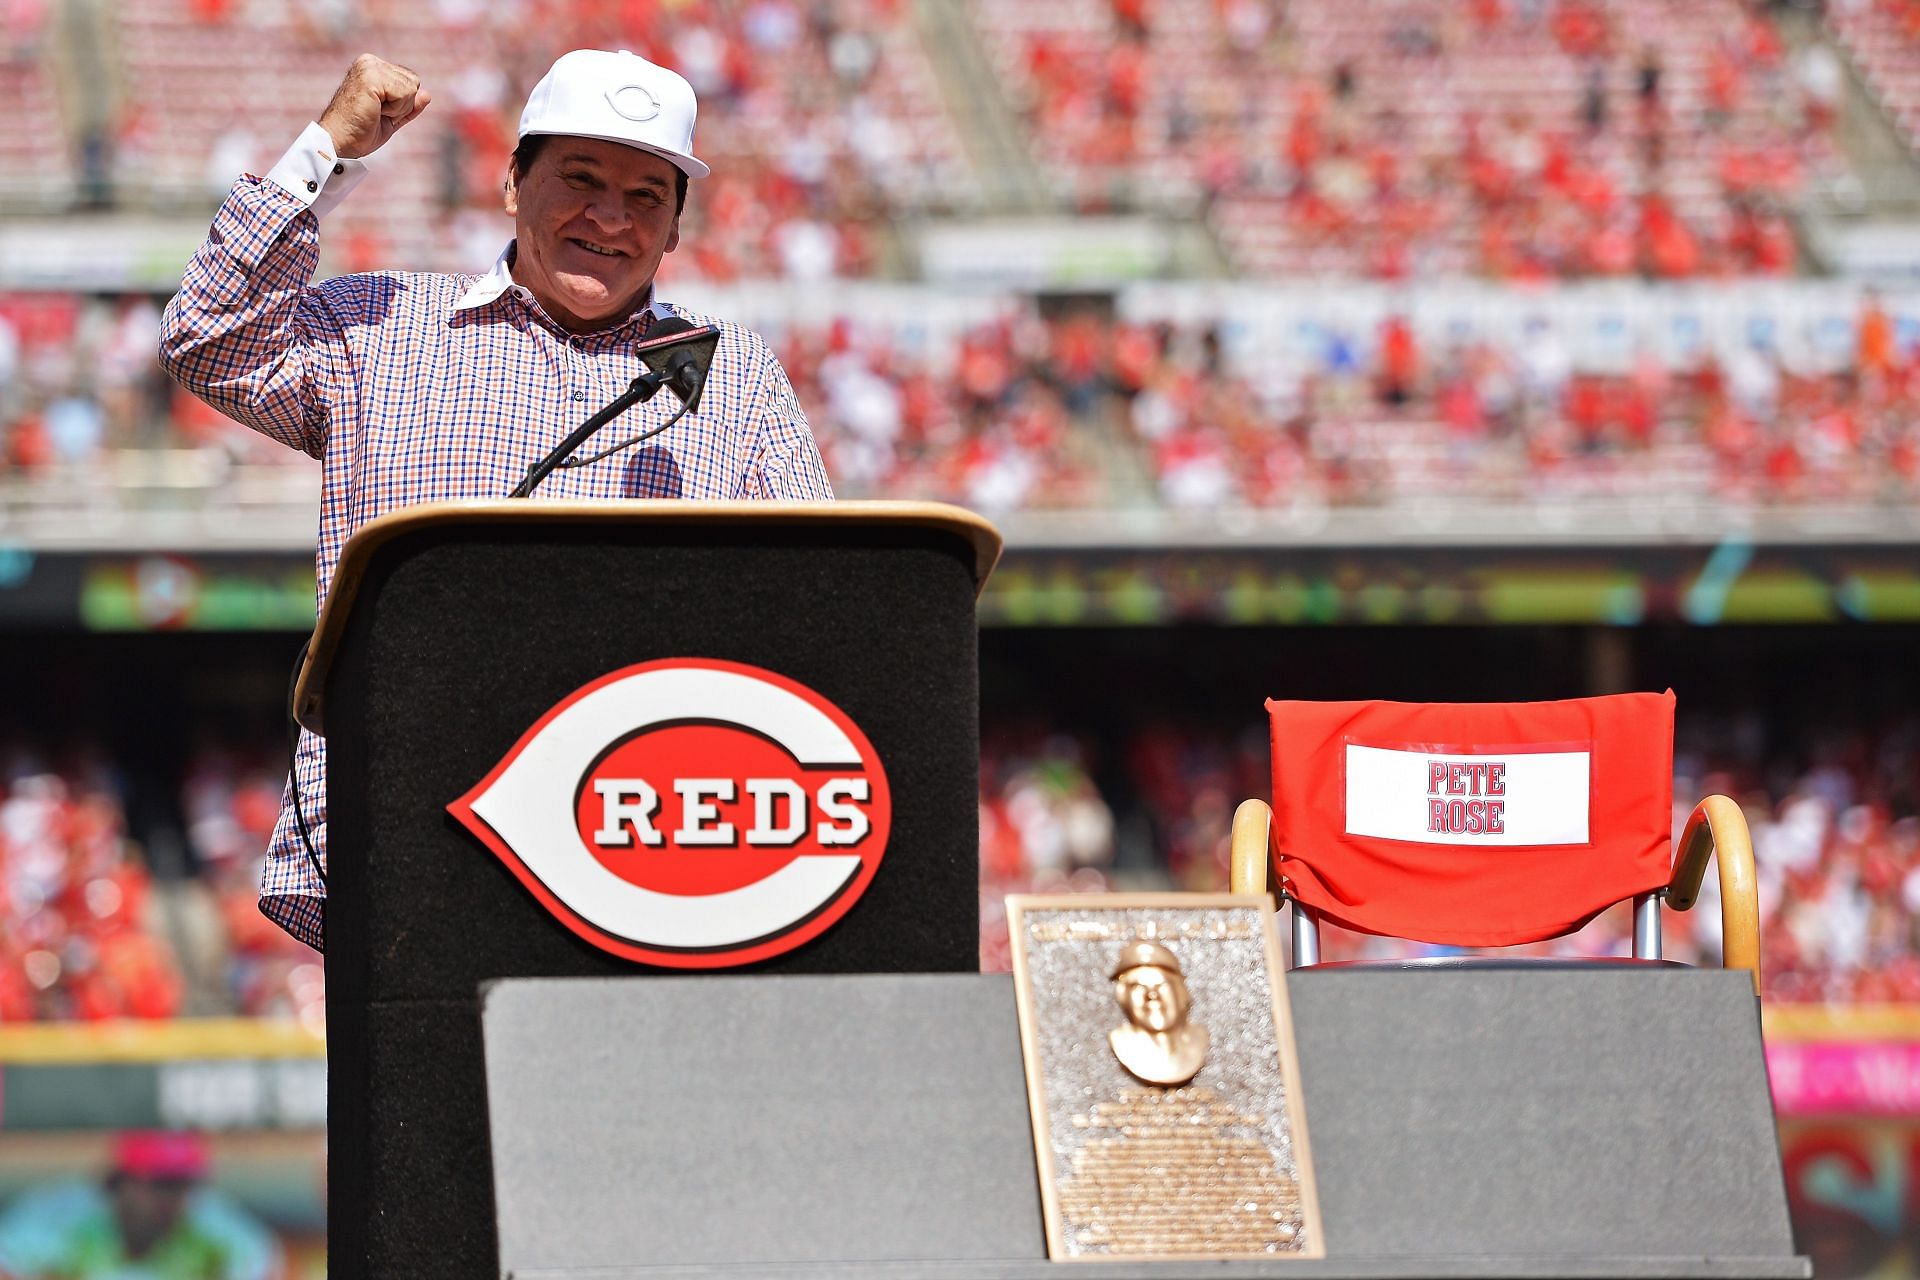 Cincinnati Reds players with 200-hit seasons: Pete Rose